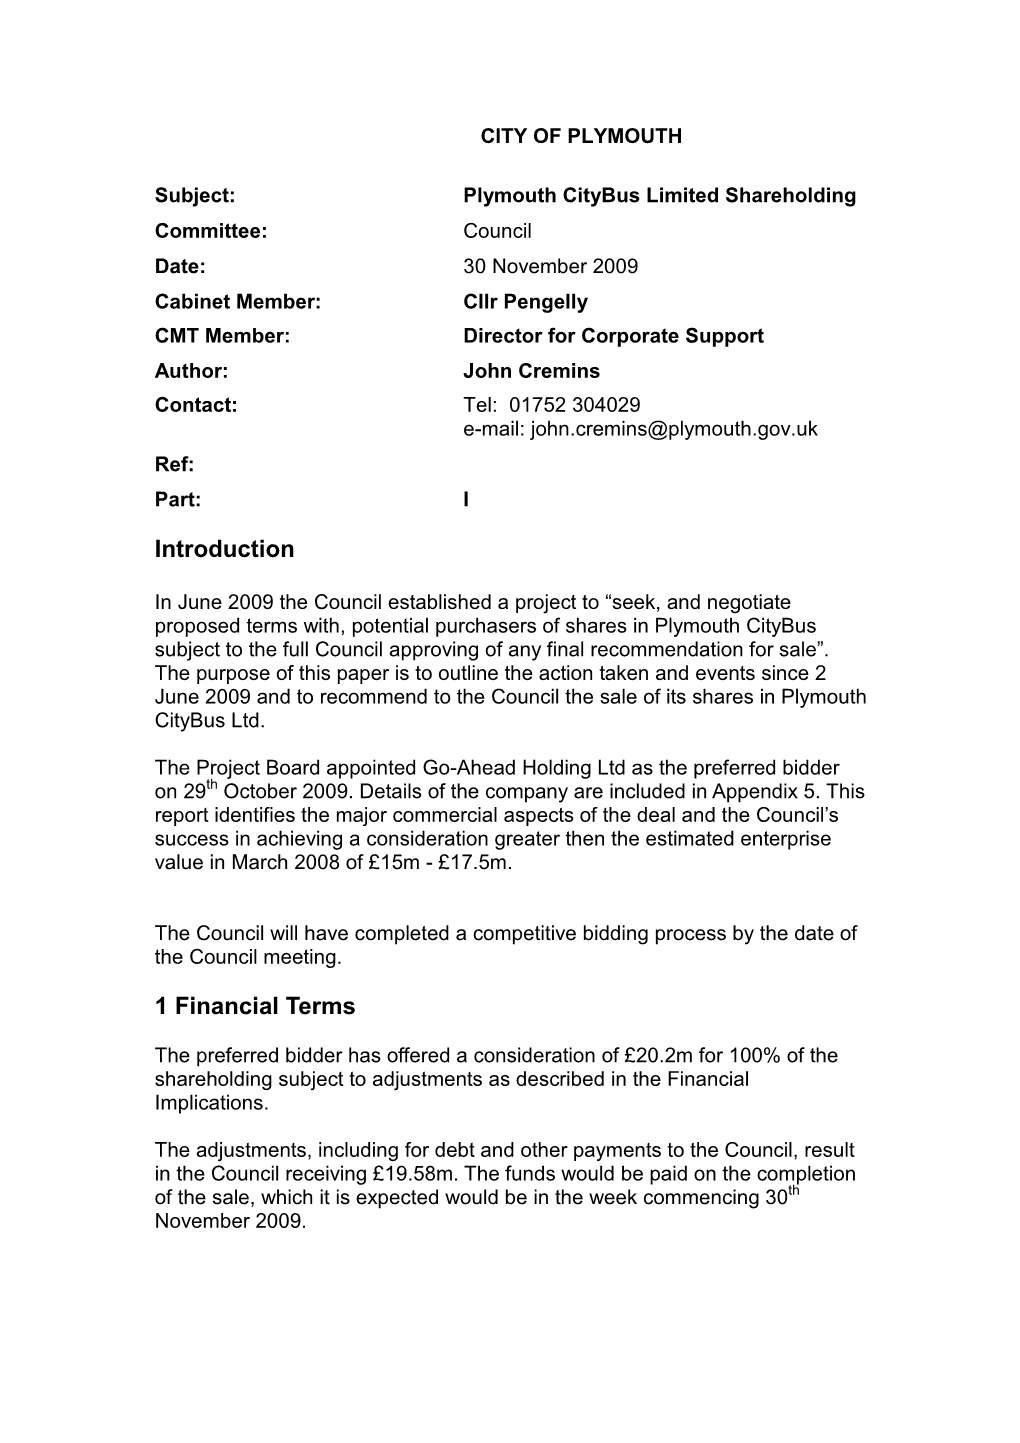 Plymouth Citybus Ltd Shareholding Report , Item 67. PDF 125 KB